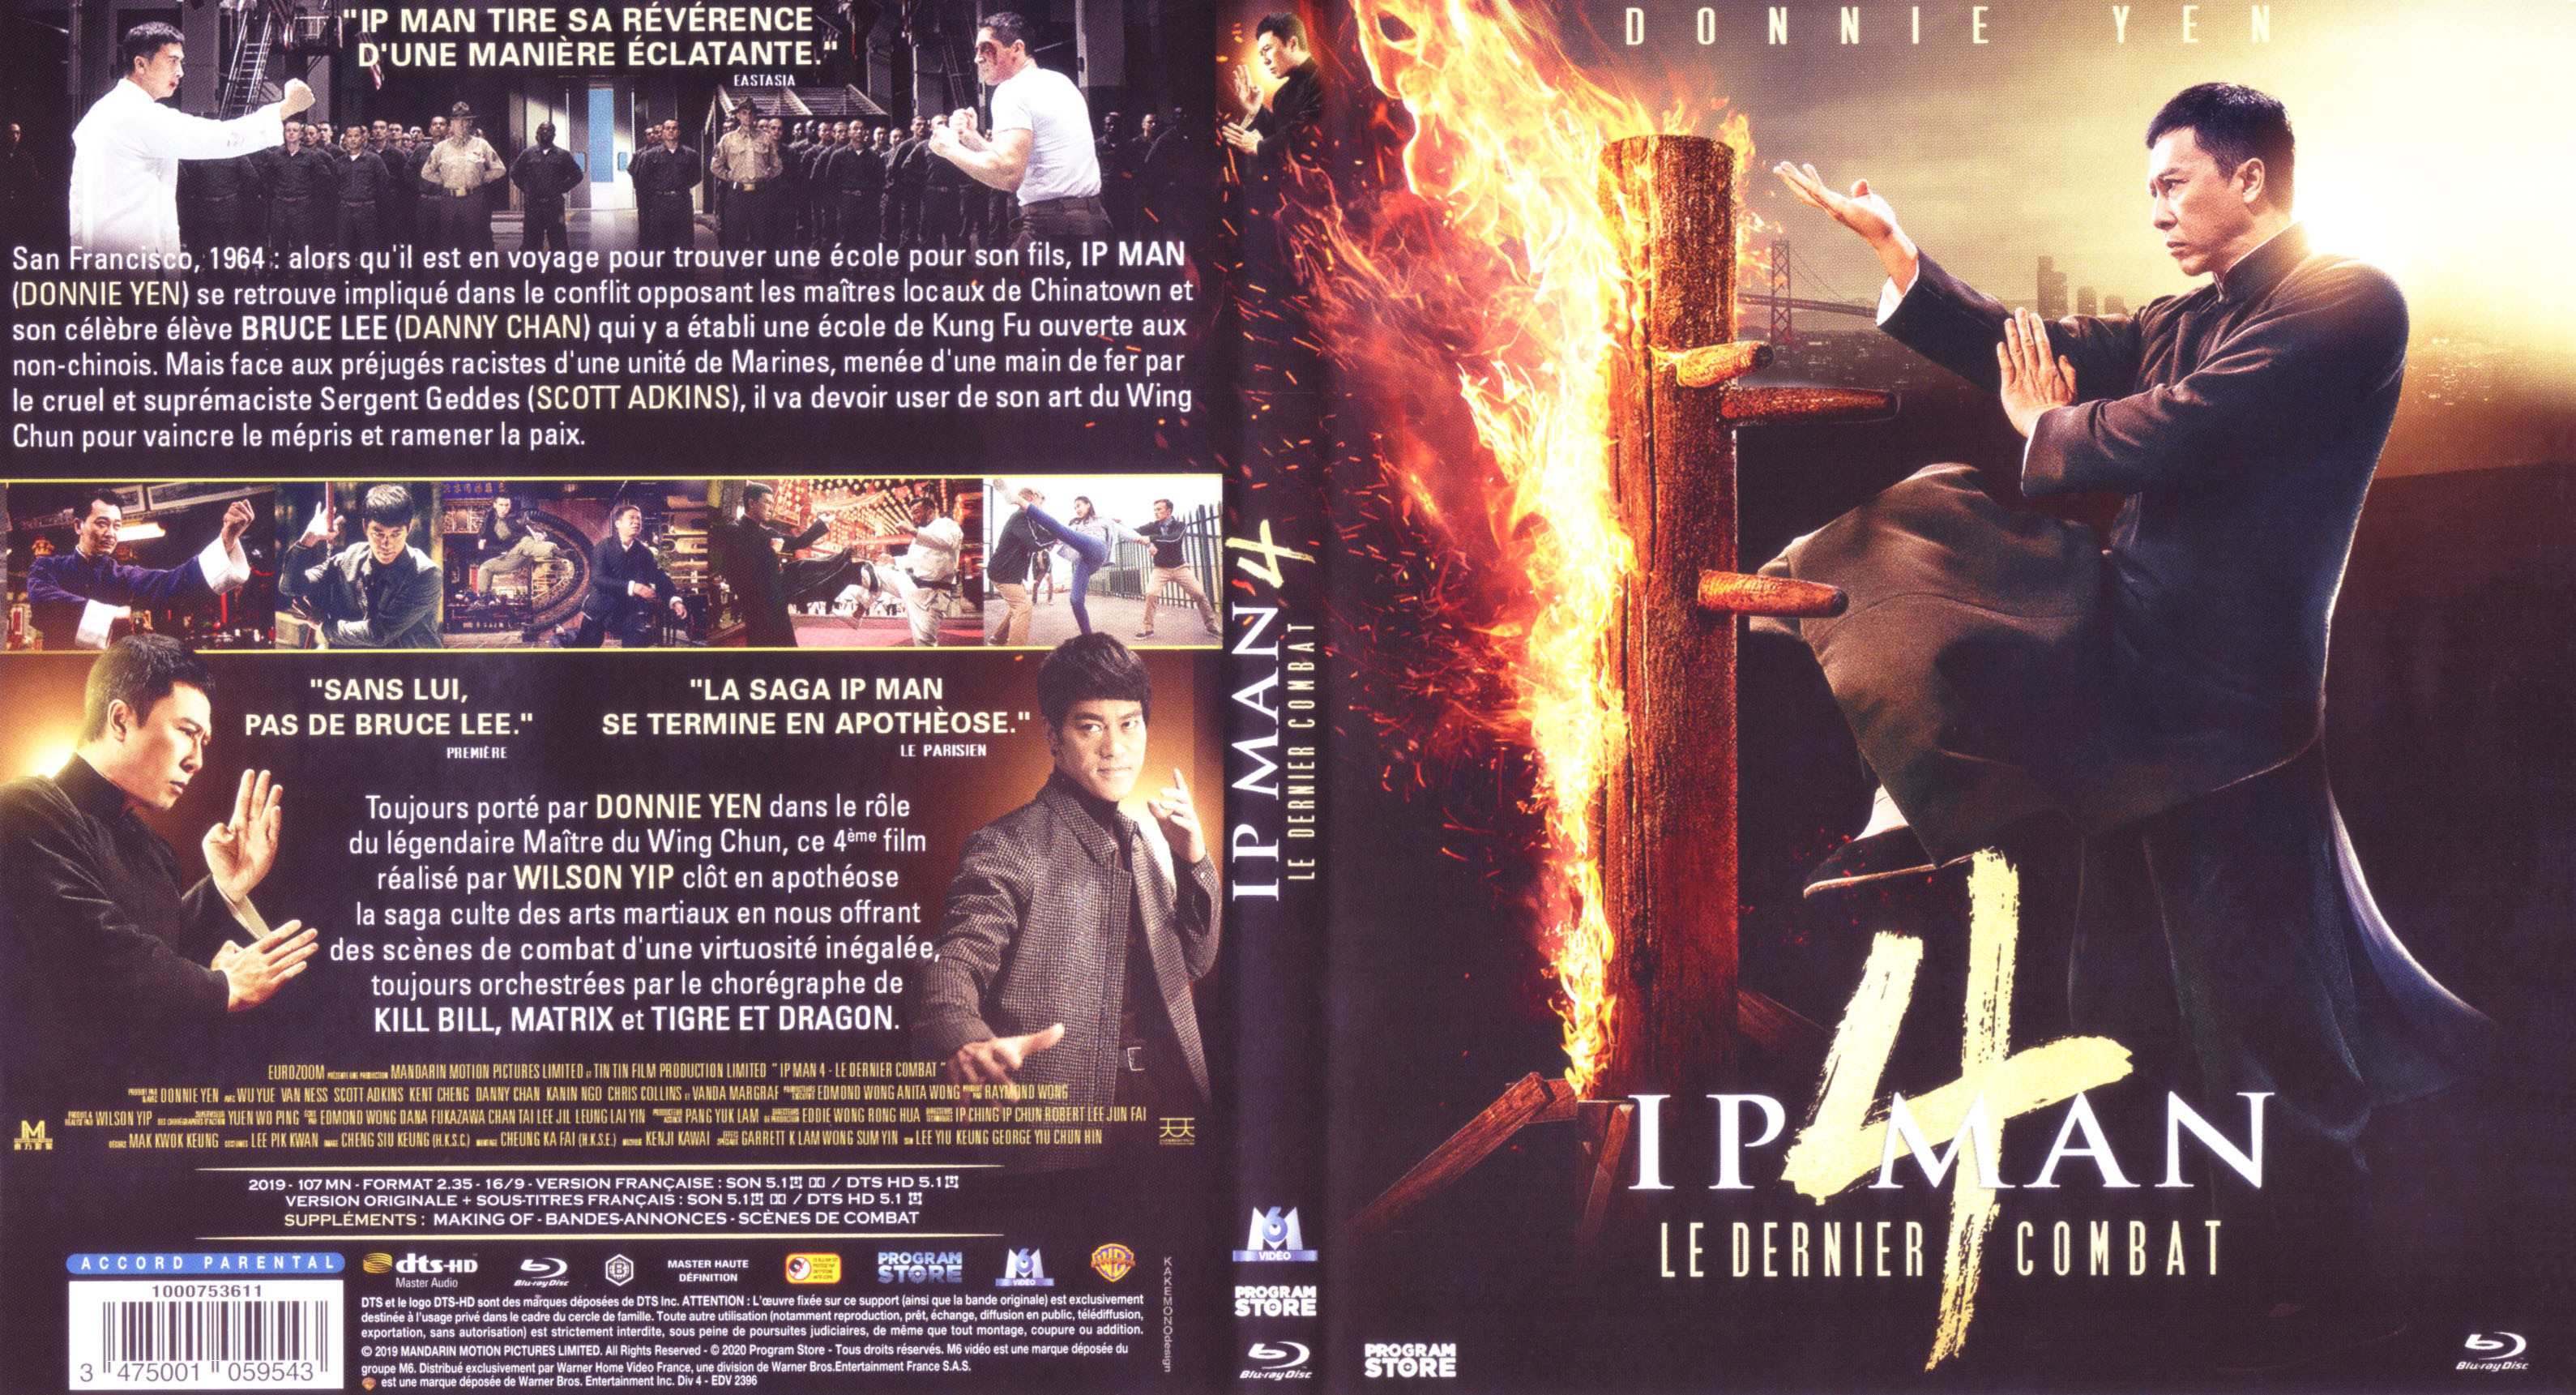 Jaquette DVD Ip man 4 (BLU-RAY)